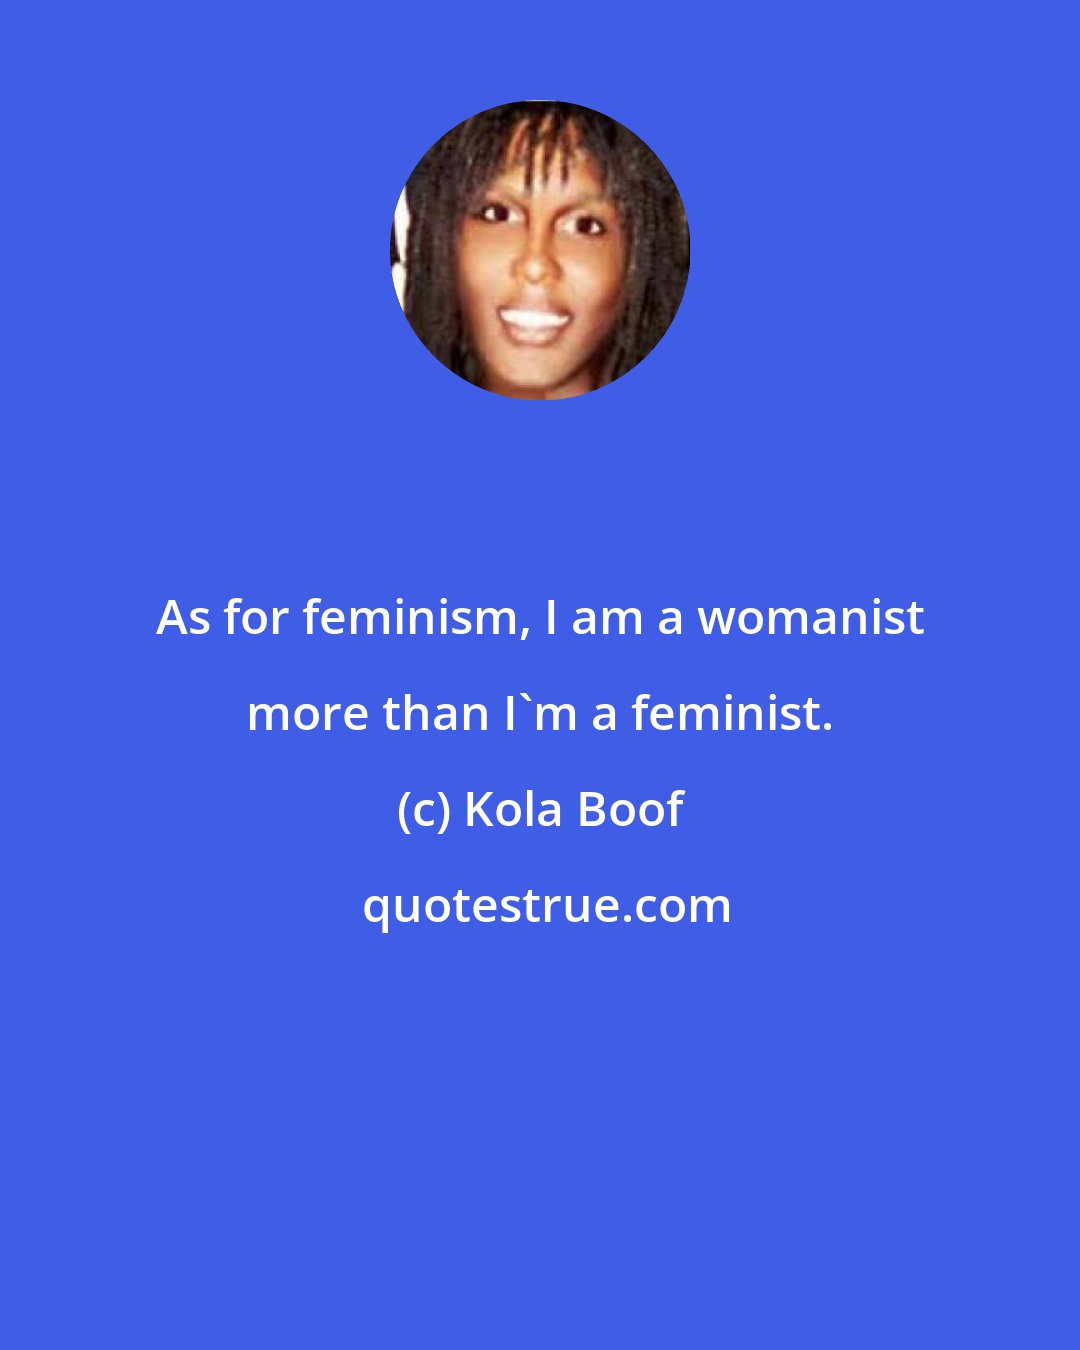 Kola Boof: As for feminism, I am a womanist more than I'm a feminist.